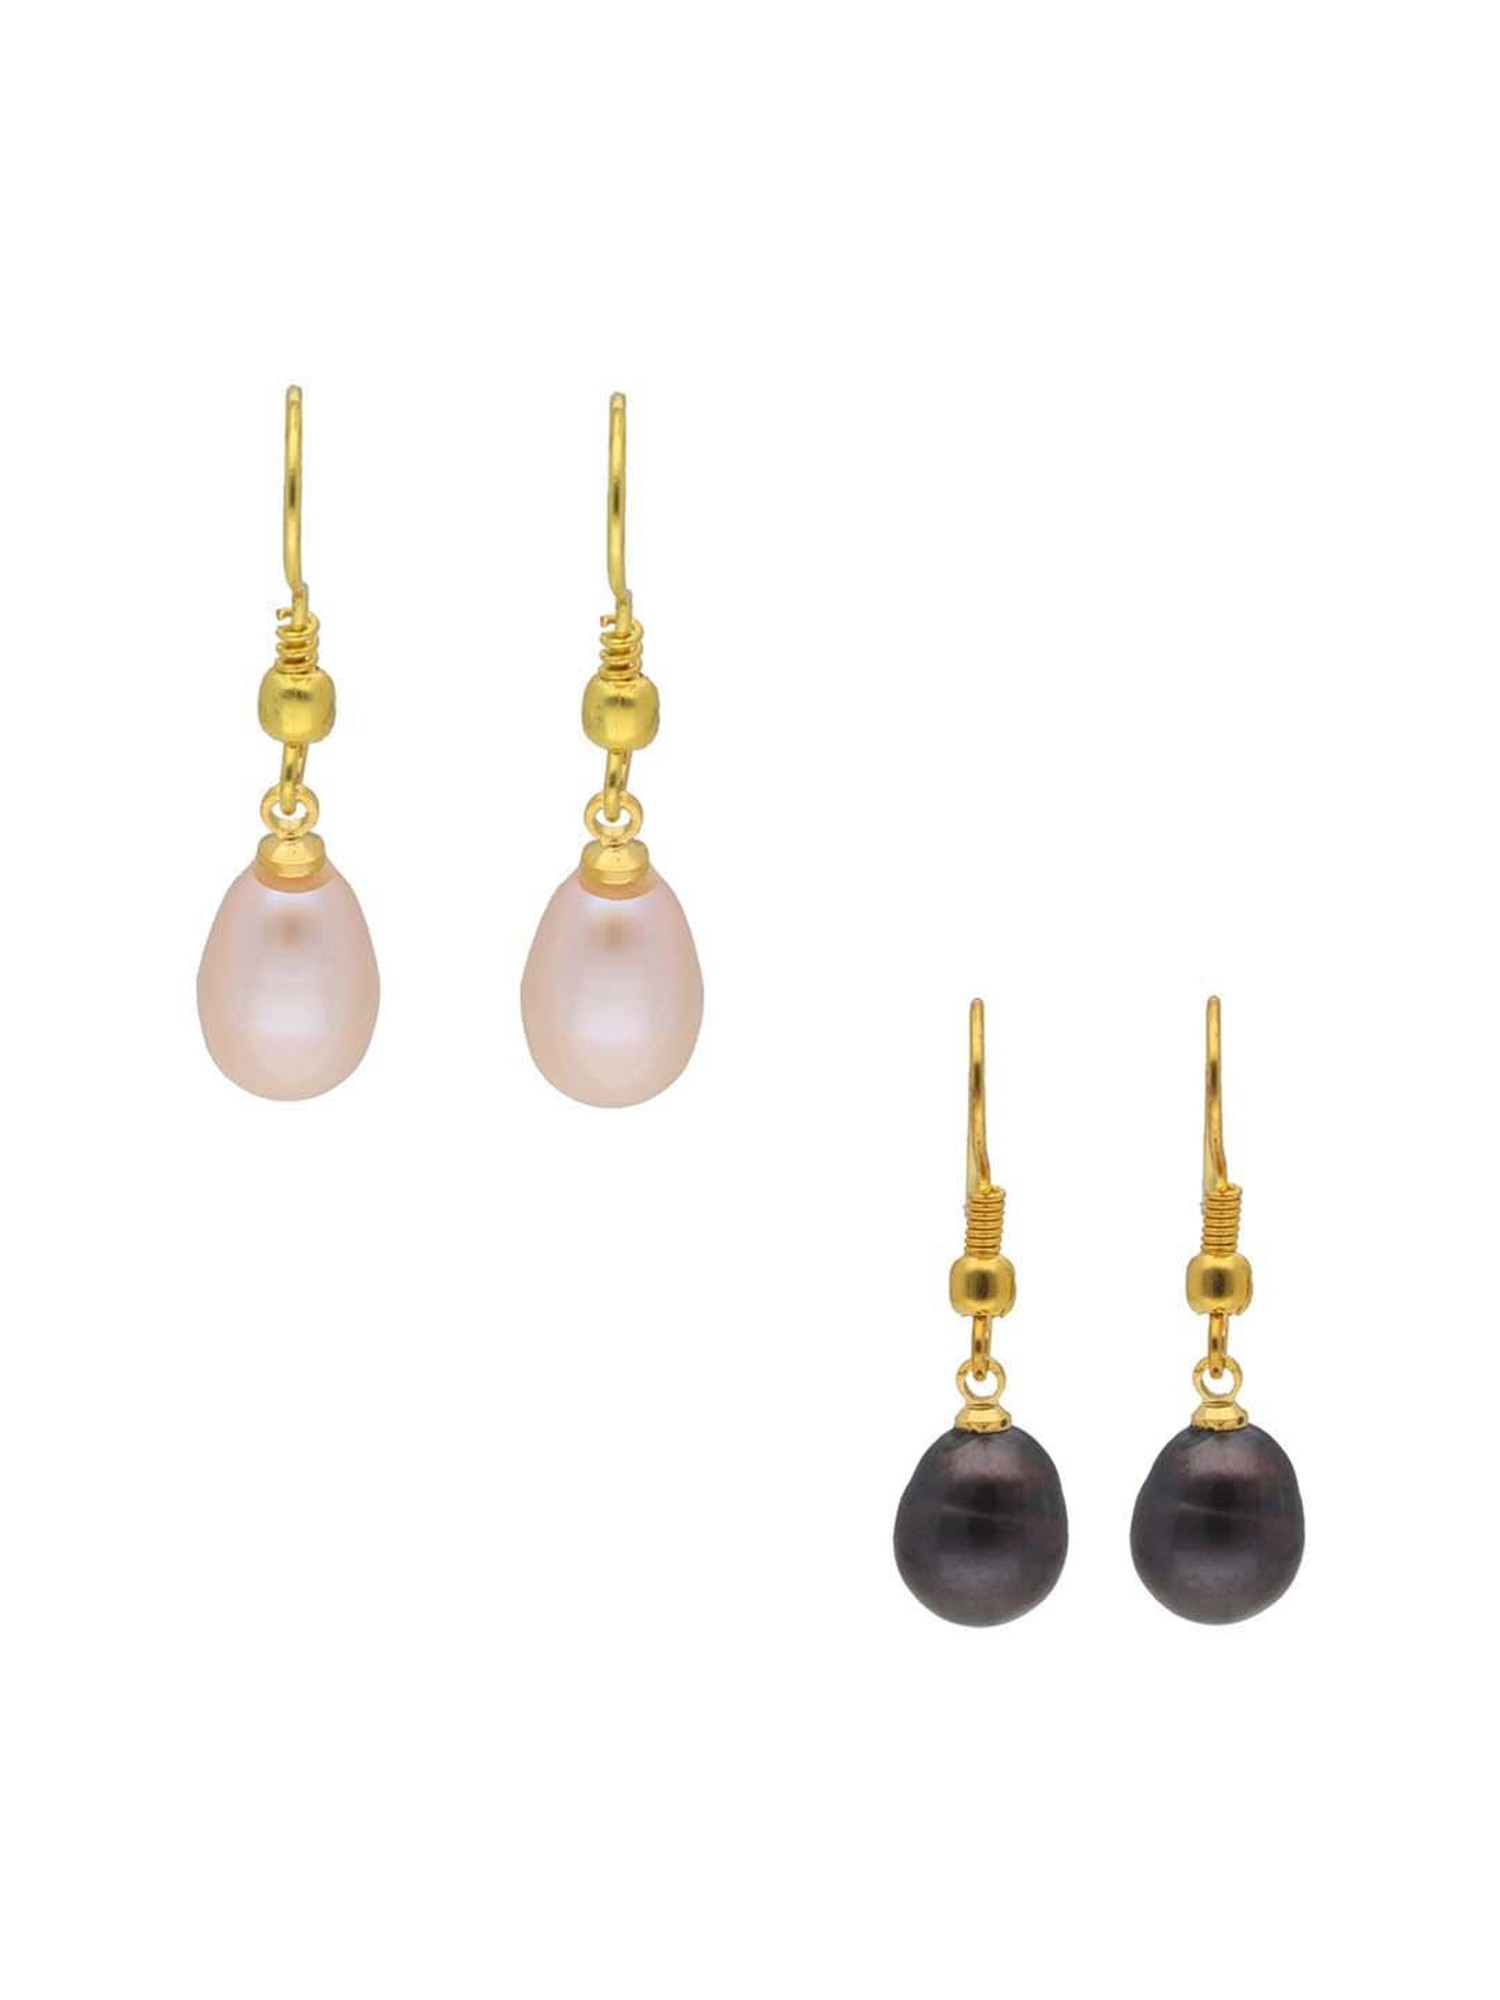 Organic Circle Pearl Drop Earrings in Gold | Lisa Angel